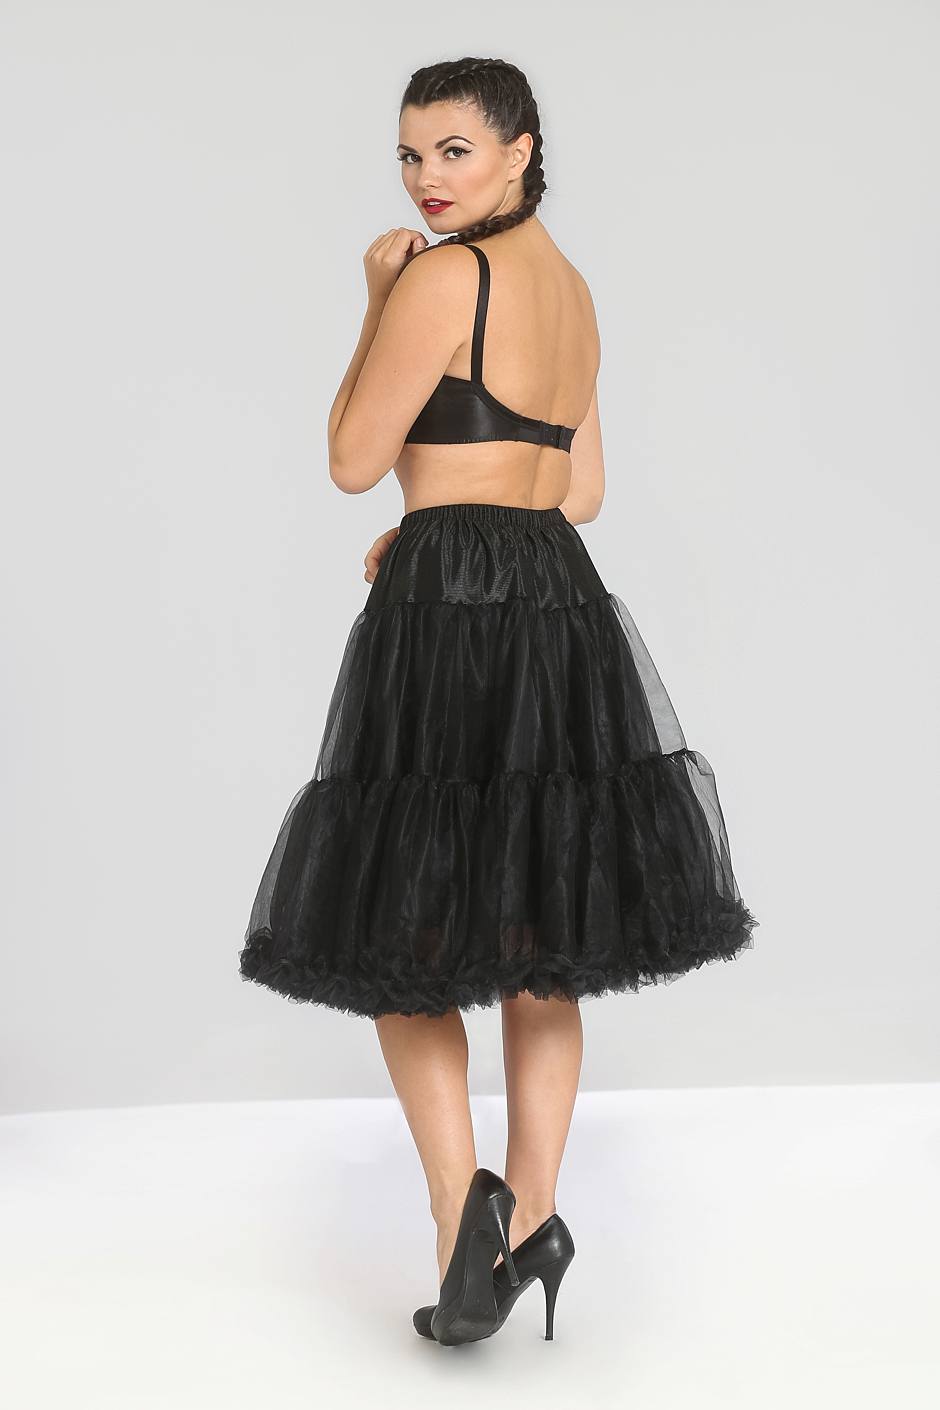 Polly Petticoat schwarz